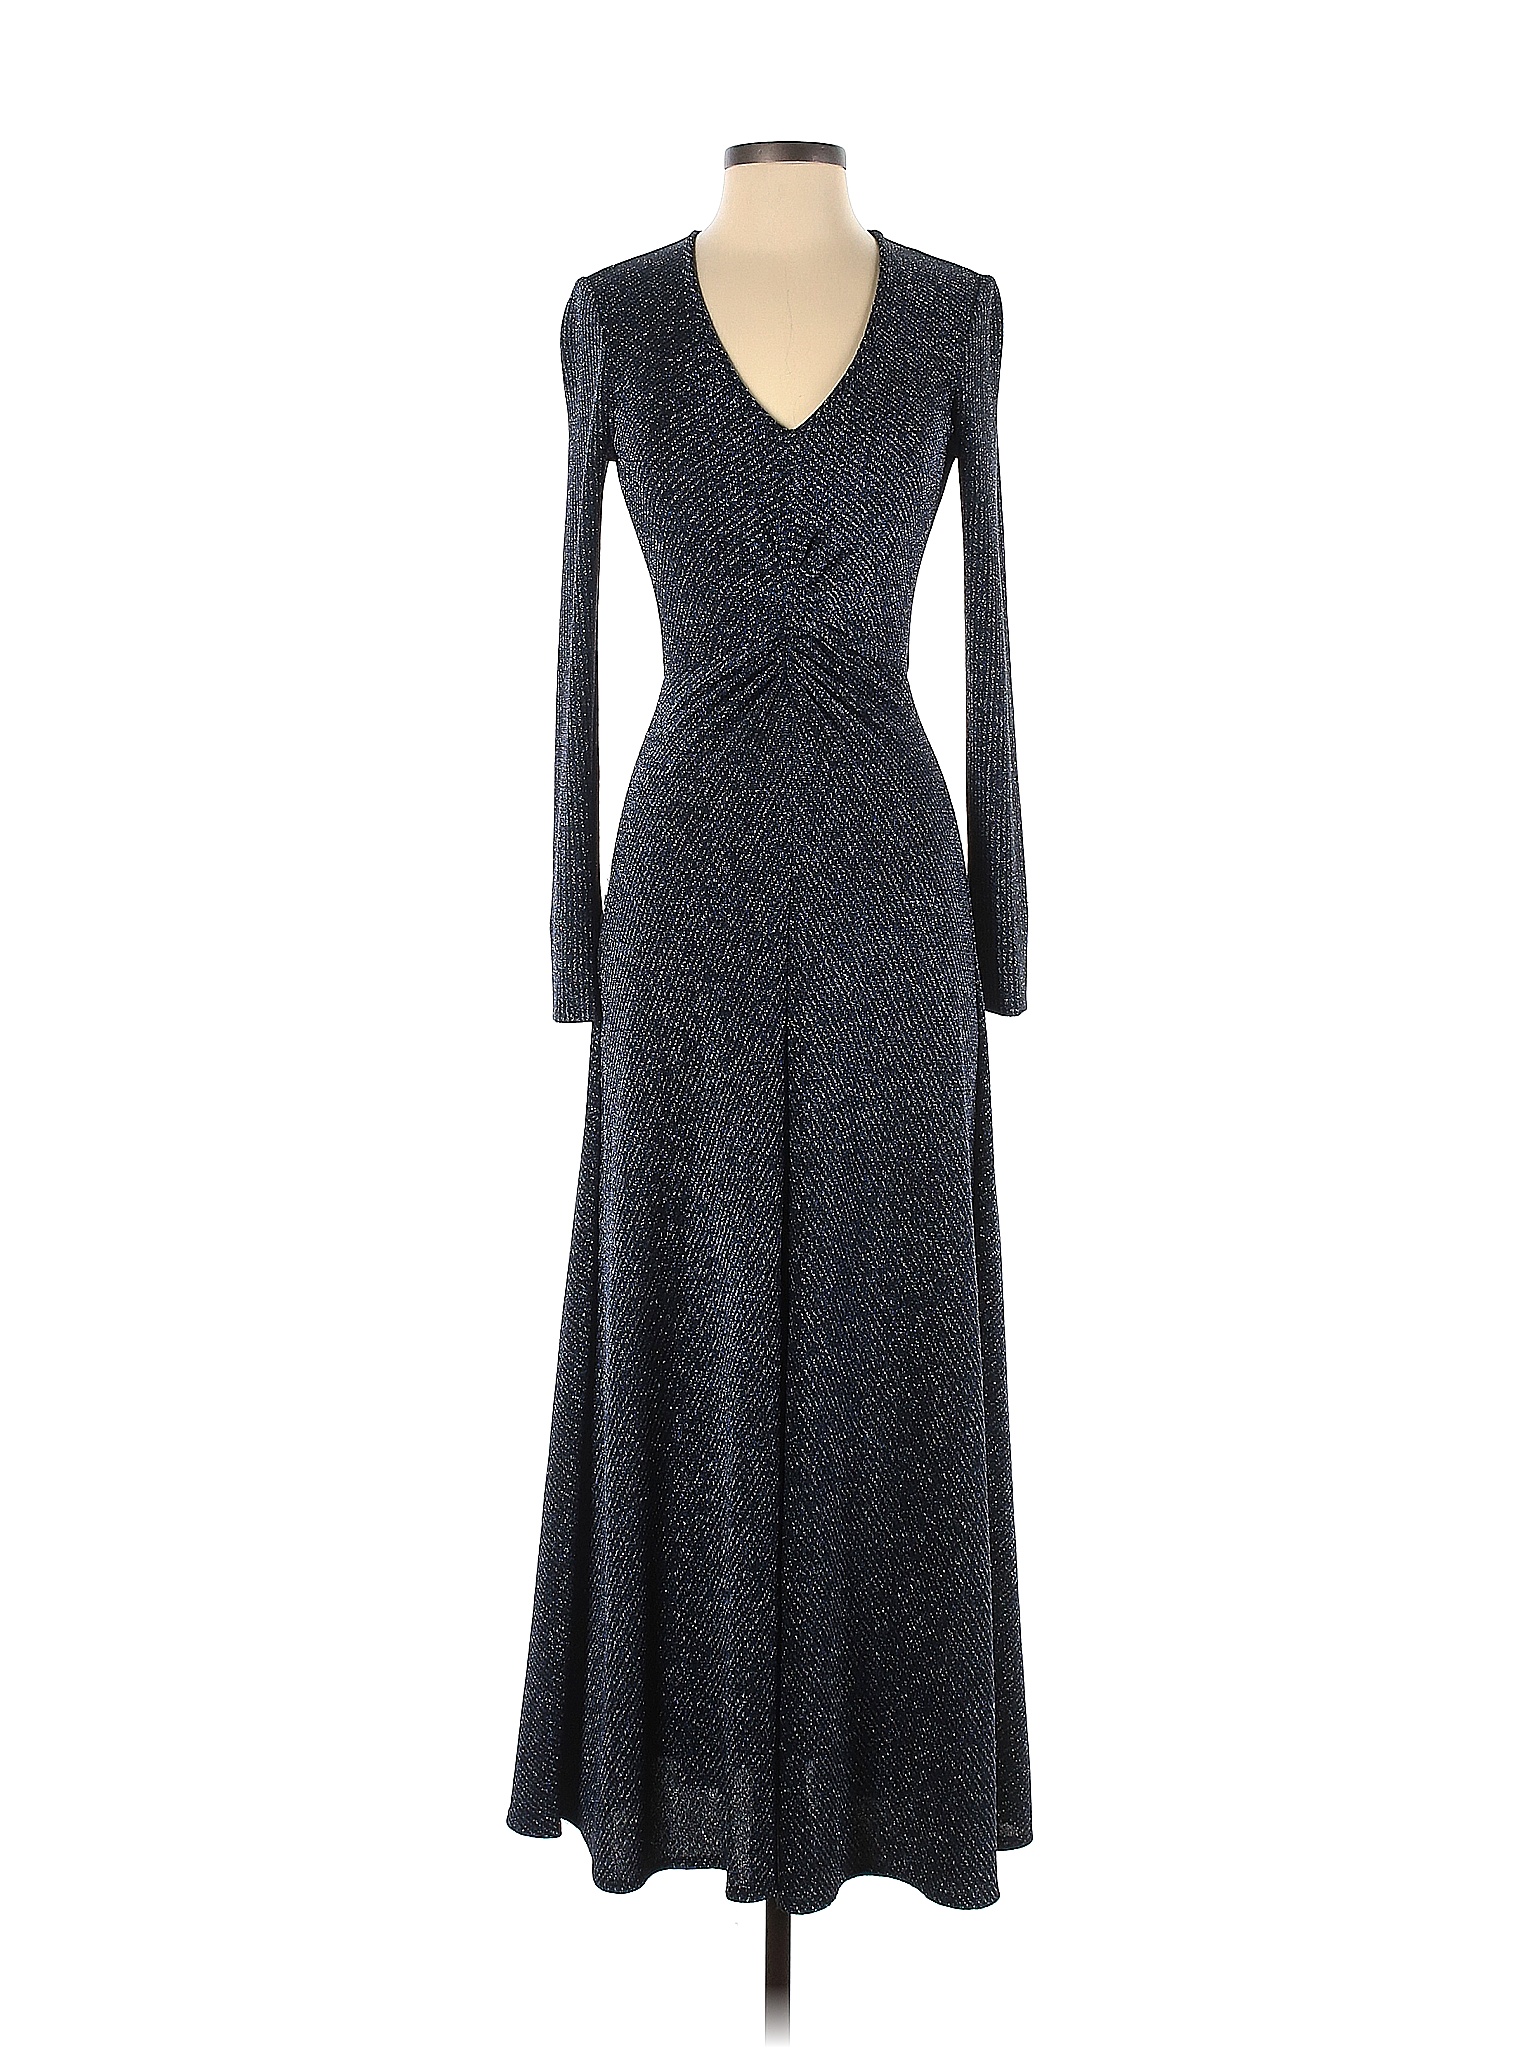 Donna Morgan Blue Shimmer Midi Dress Size 0 - 74% off | thredUP